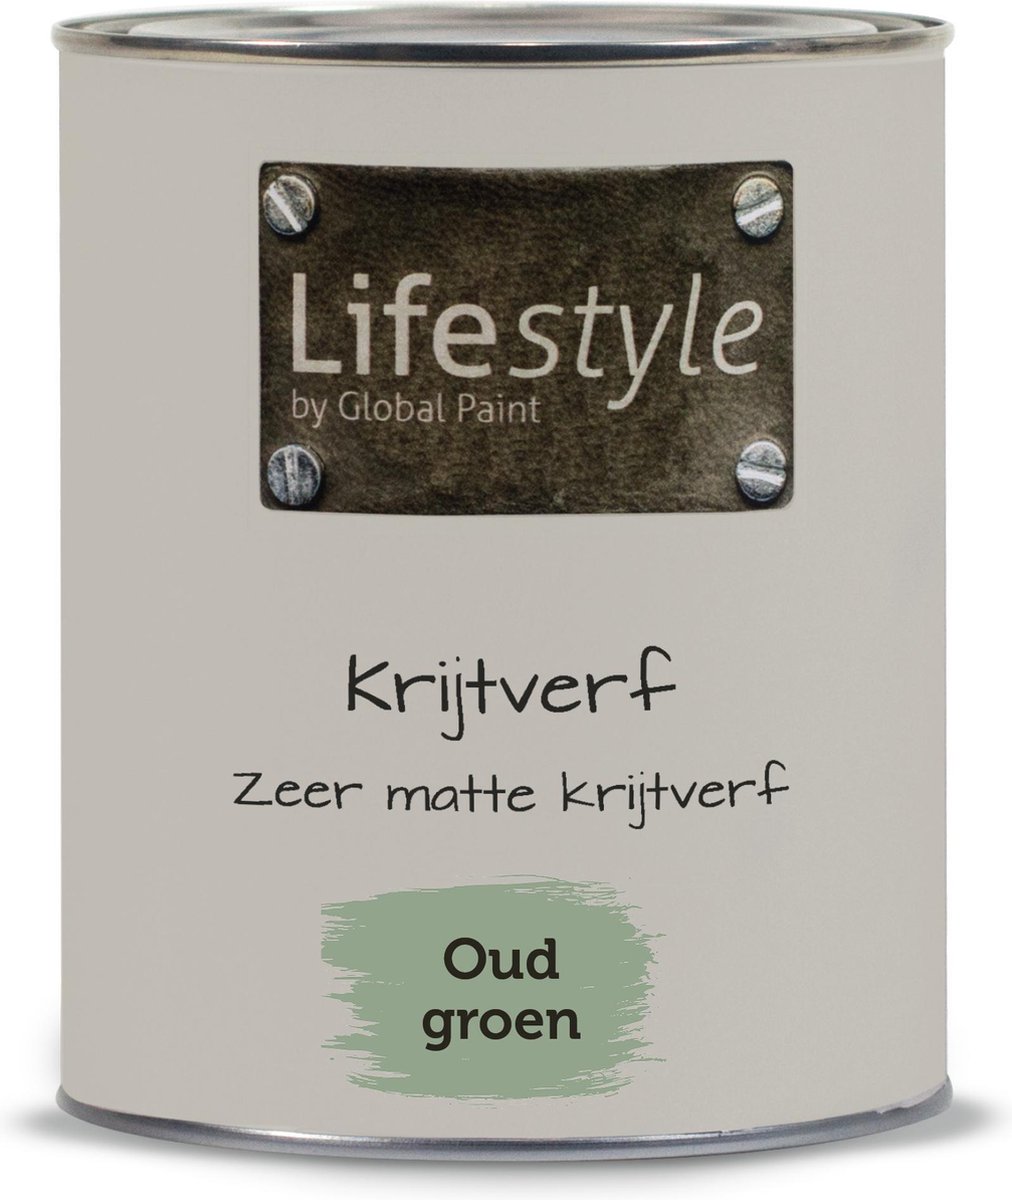 Lifestyle Krijtverf - Oud groen - 1 liter | bol.com